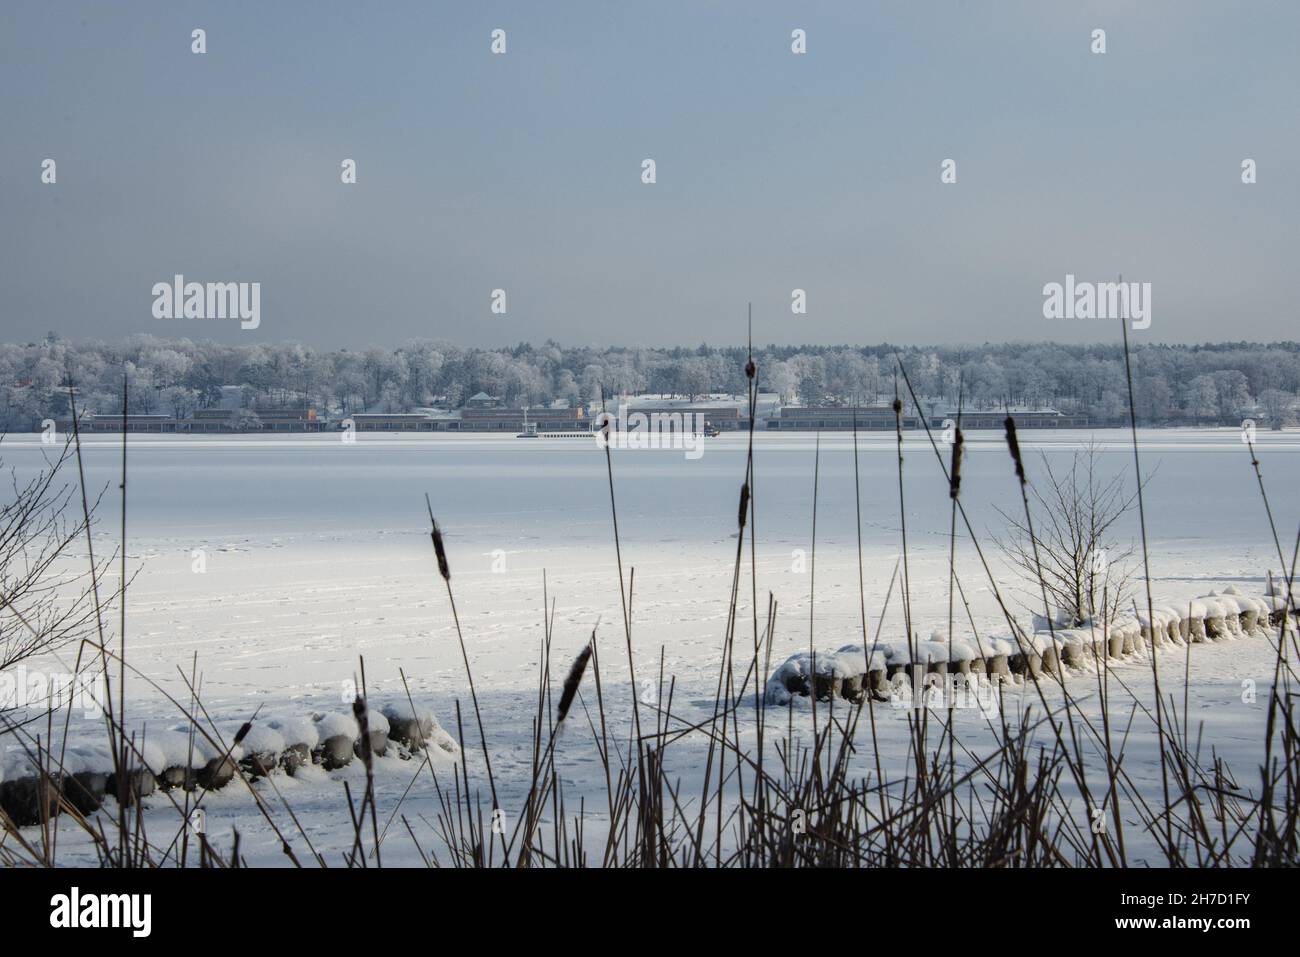 Grau auf Weiß: Blick übers Eis zum historischen Strandbad Wannsee - Grey and white: view across frozen lake Wannsee to the historic lido builidings. Stock Photo